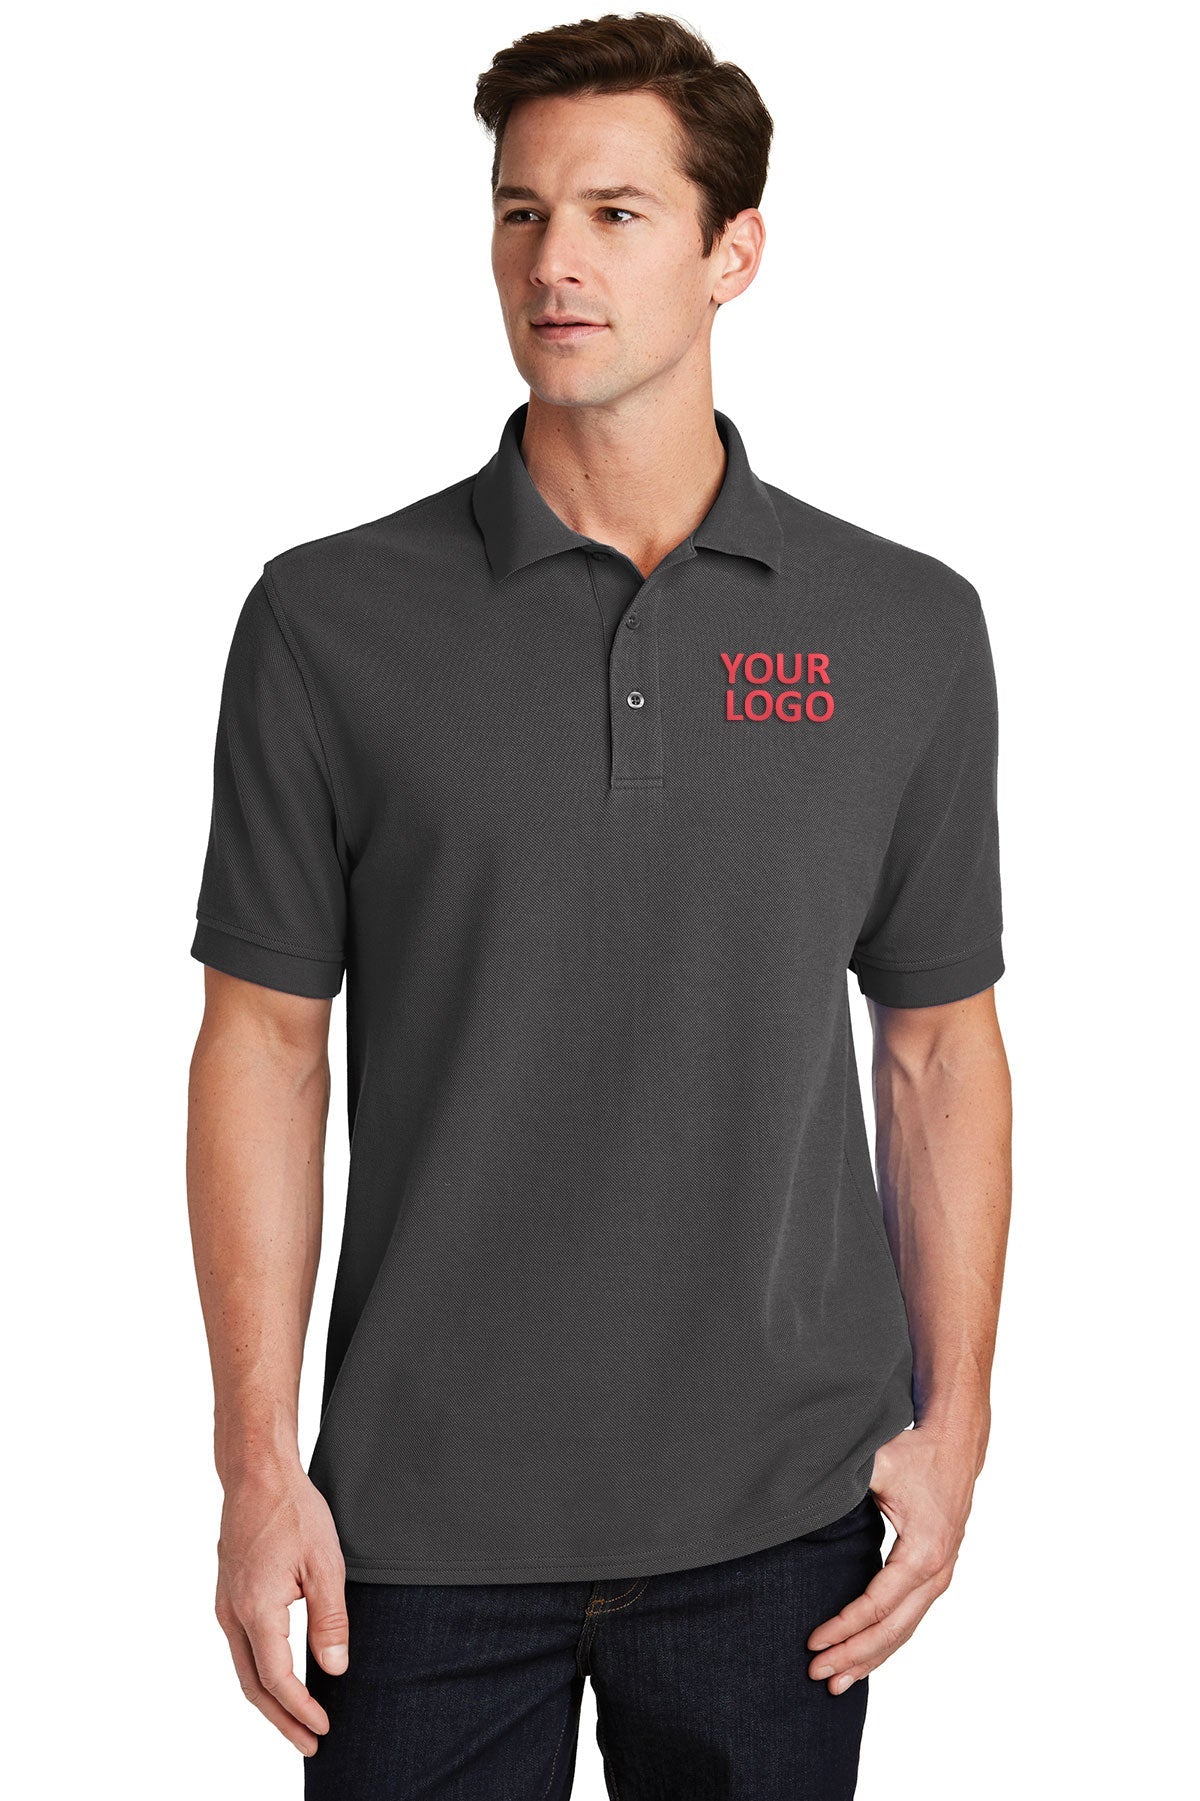 Port & Company Charcoal KP1500 custom company polo shirts